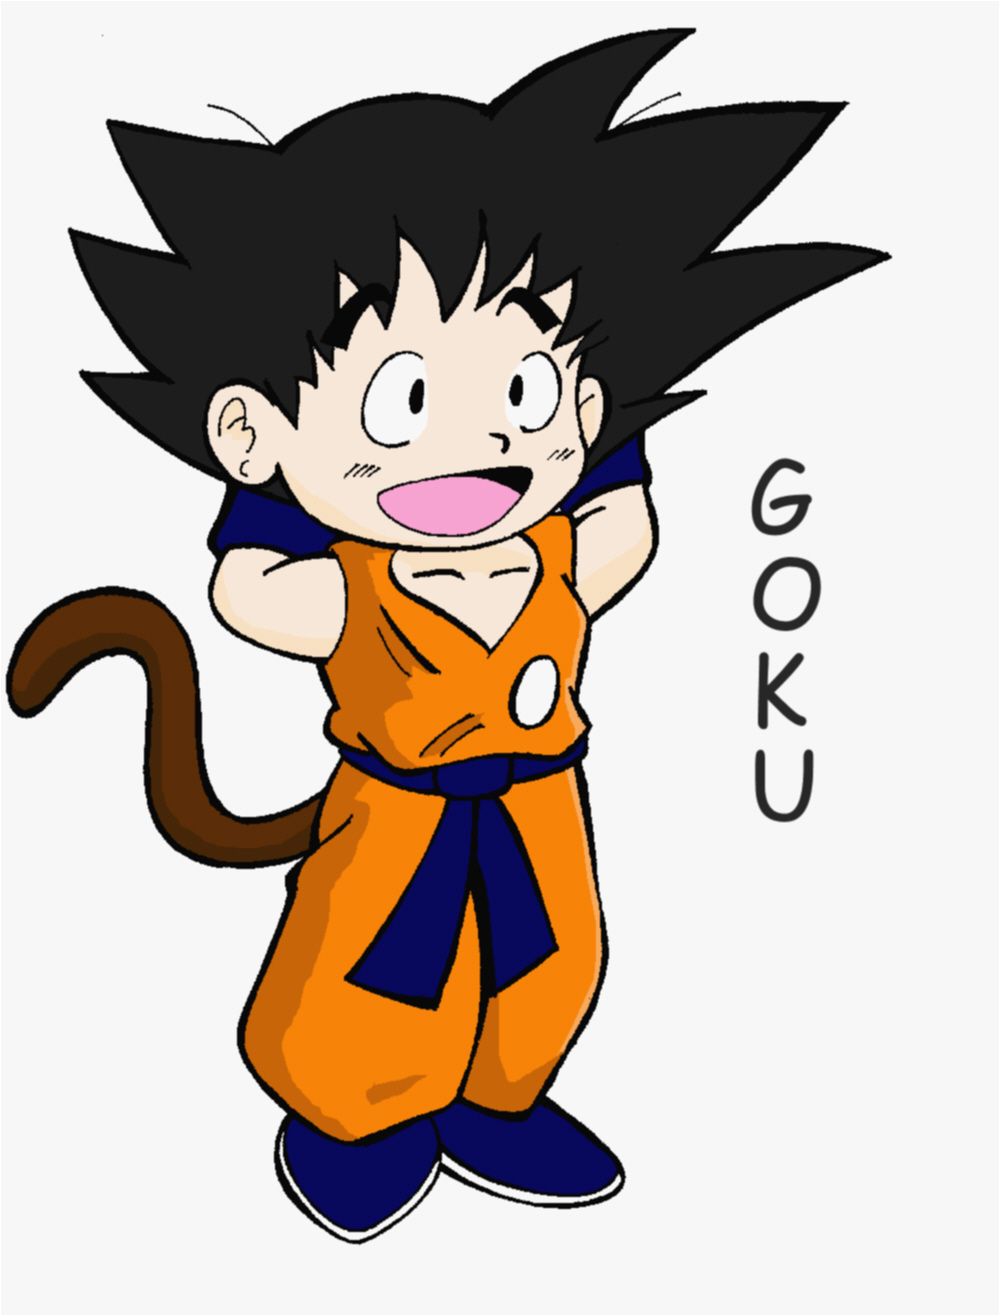 Kid Goku by ShadowLink_350